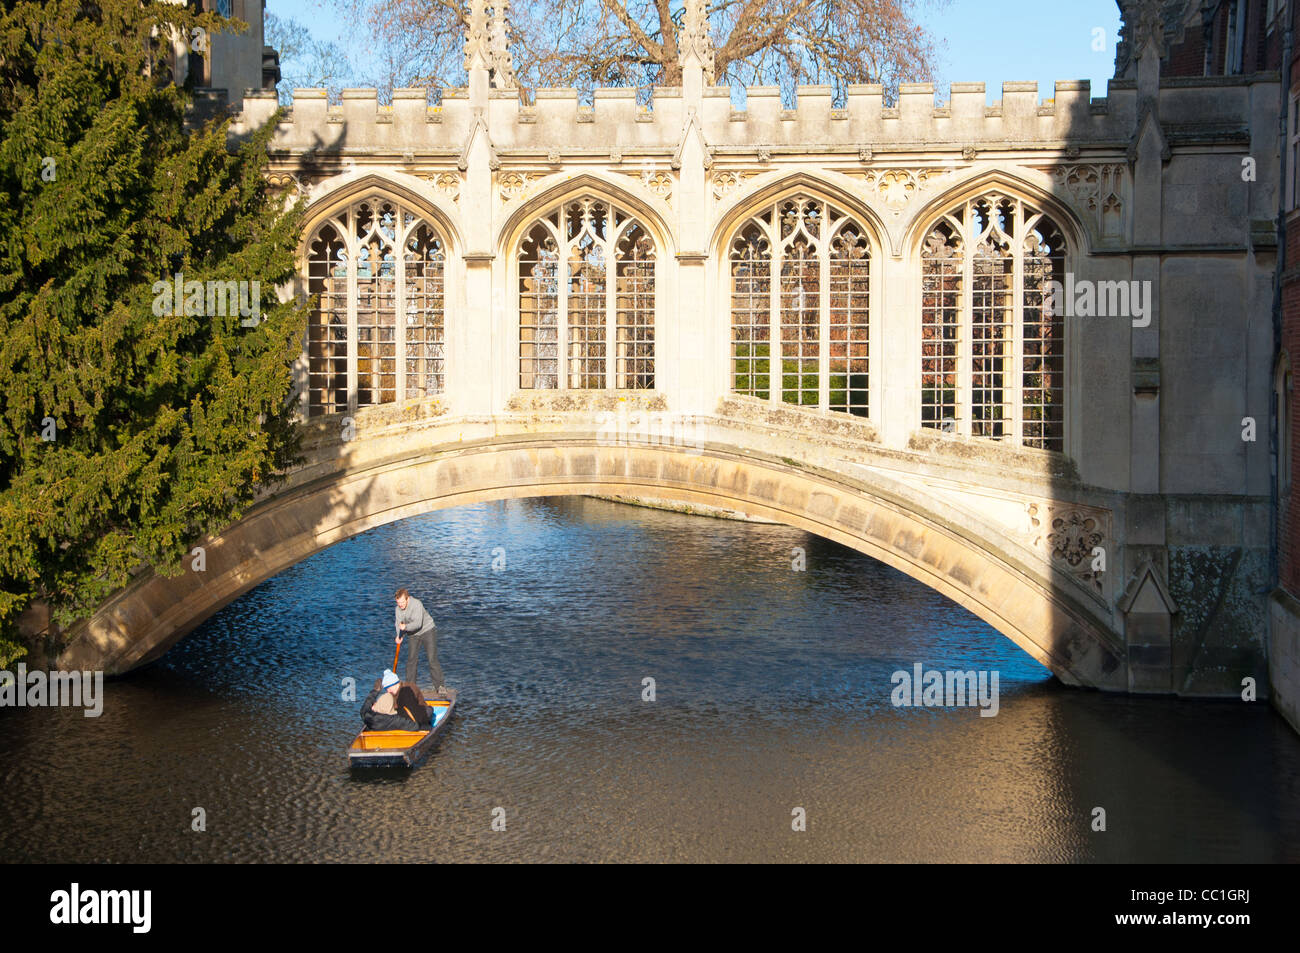 Bridge of Sighs at St John's college, Cambridge, UK Stock Photo